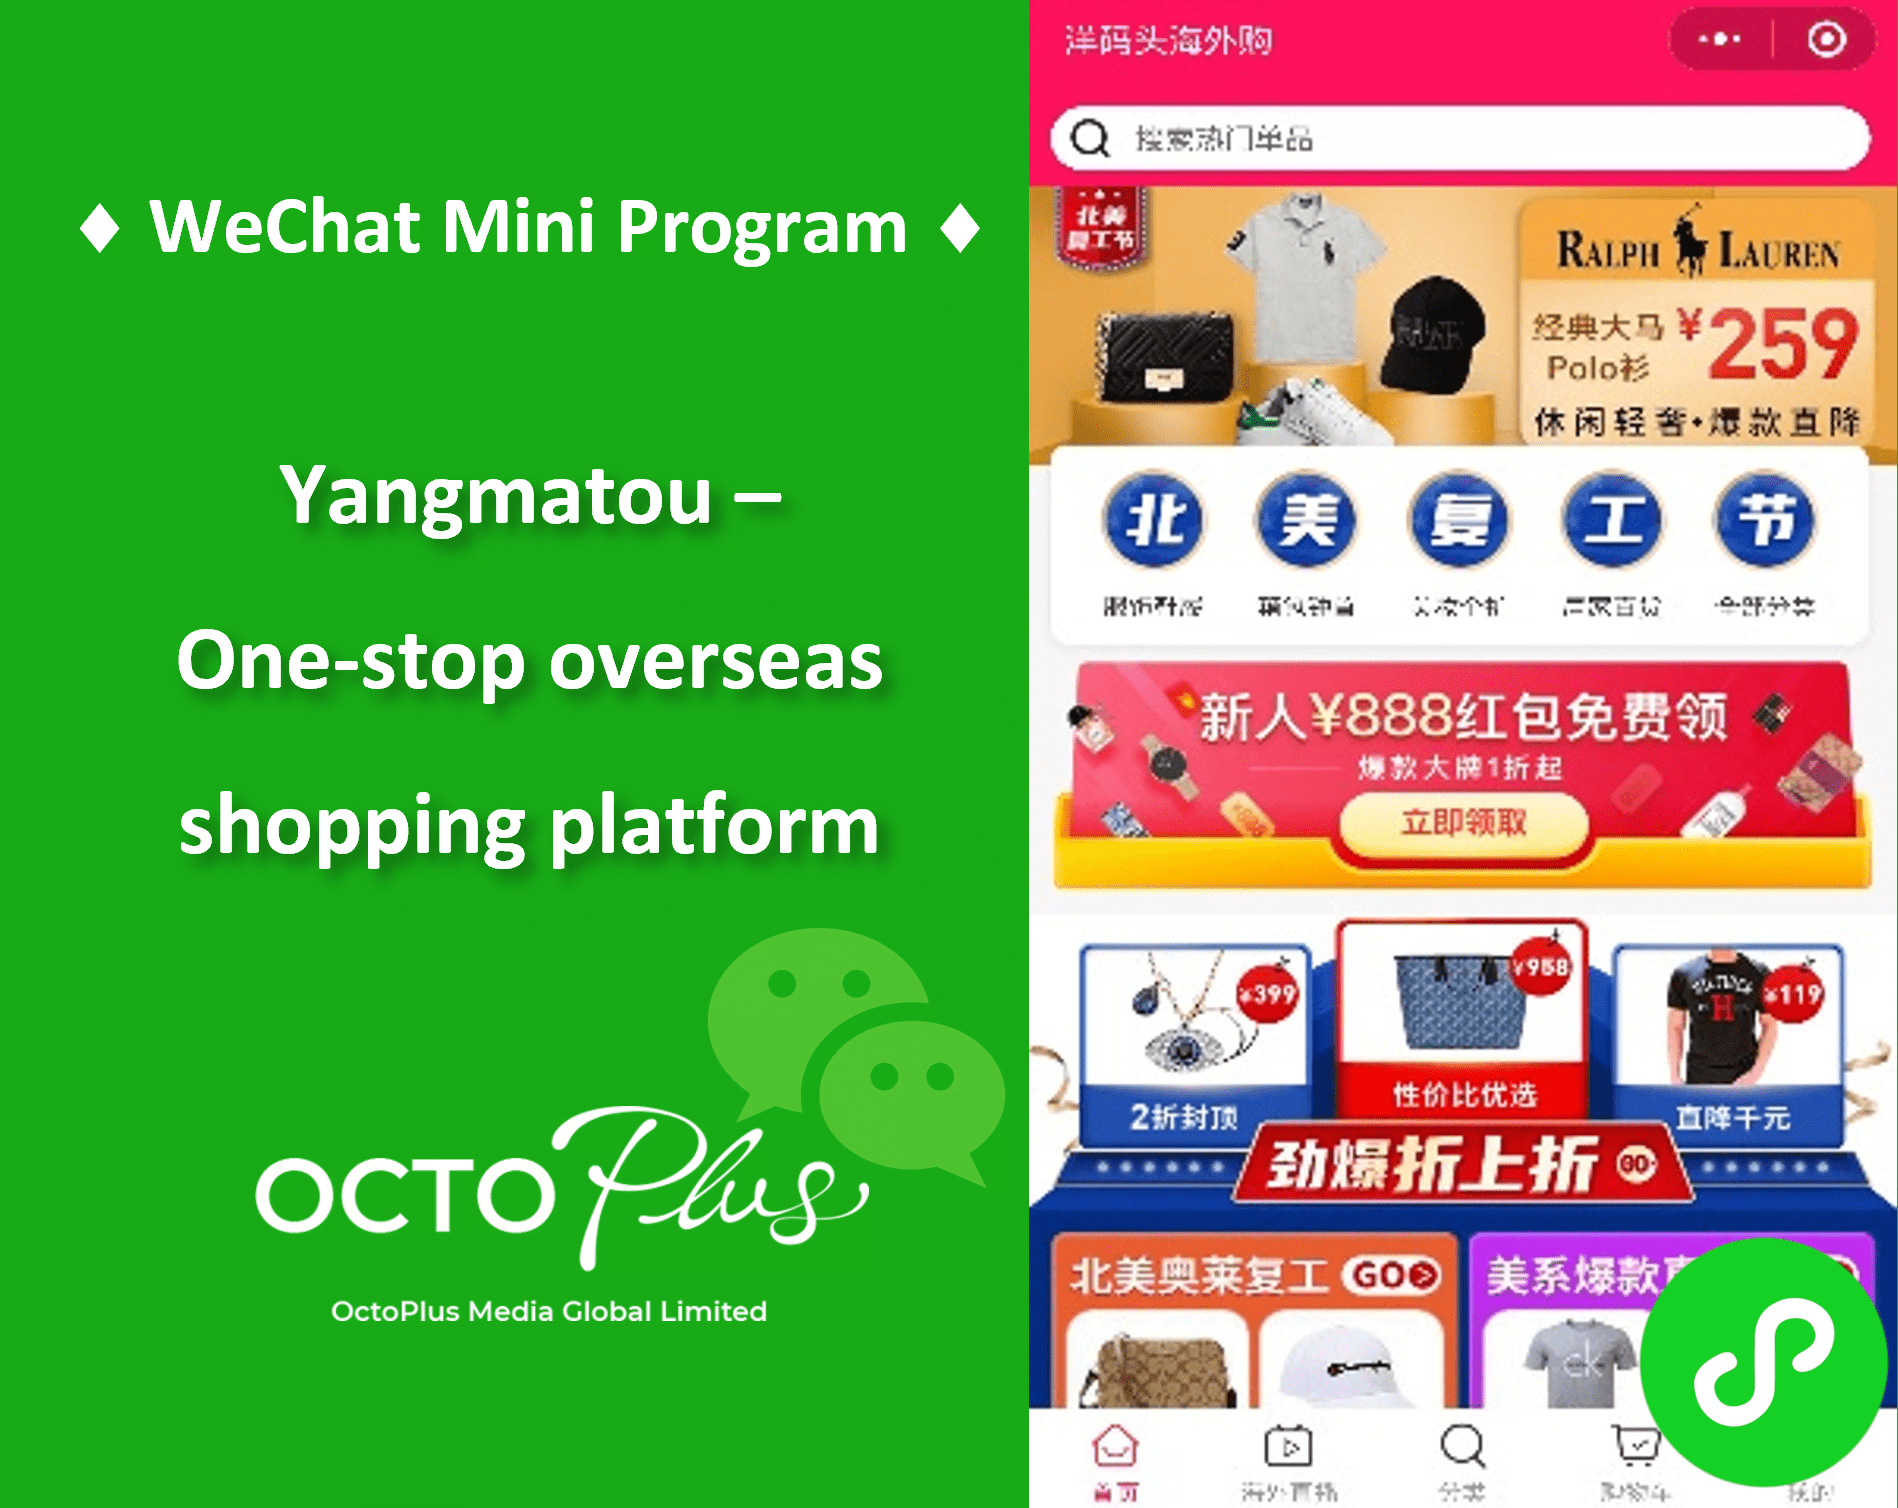 Selling to China Ecommerce WeChat Miniprogram - Yangmatou, Daigou Marketplace